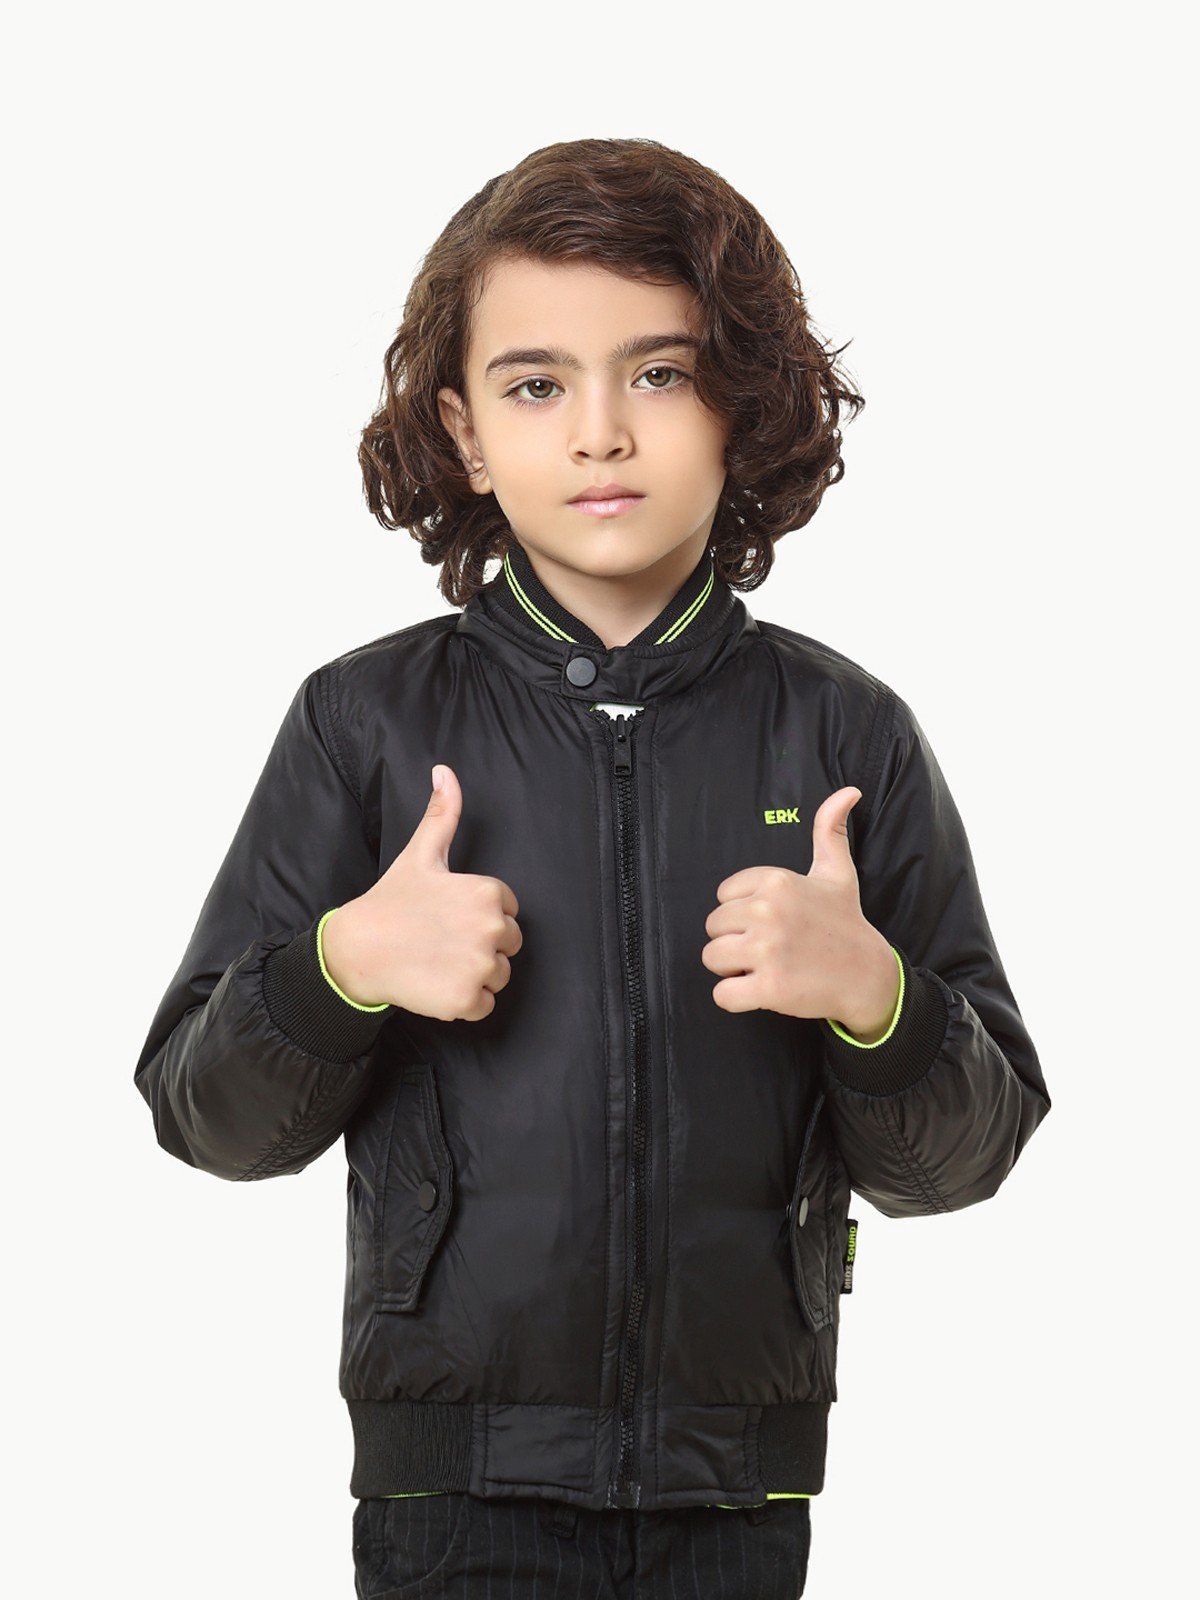 bugrasi traders Full Sleeve Colorblock Boys Jacket - Buy bugrasi traders  Full Sleeve Colorblock Boys Jacket Online at Best Prices in India |  Flipkart.com